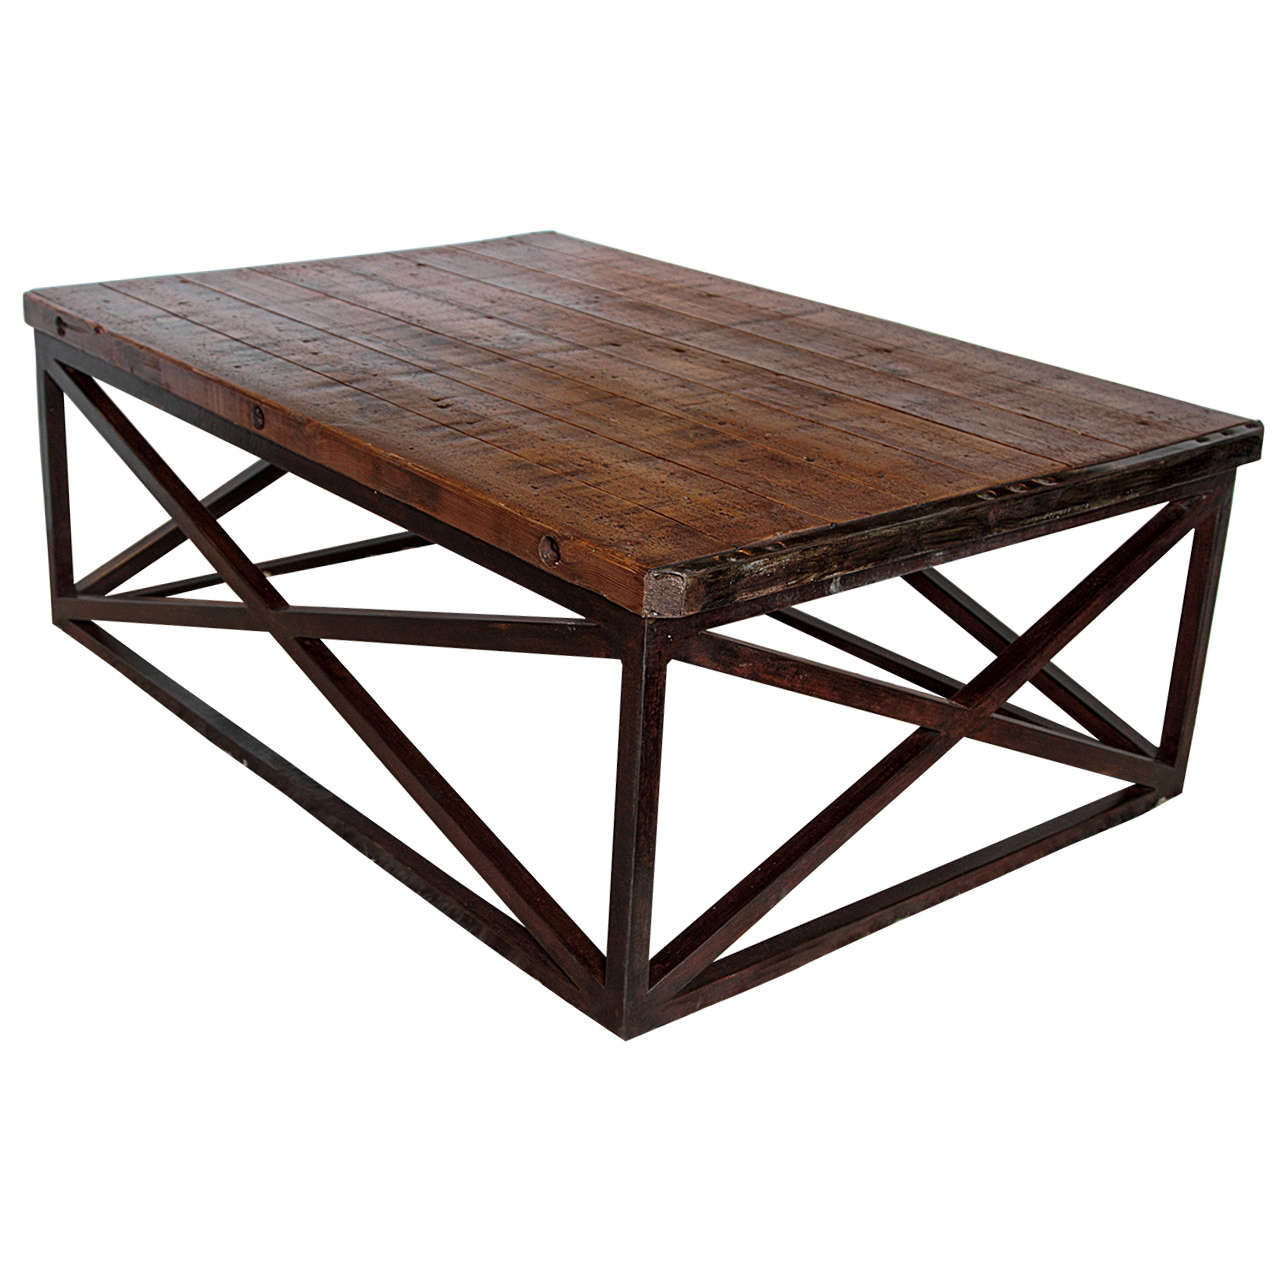 Brick Pallet Coffee Table